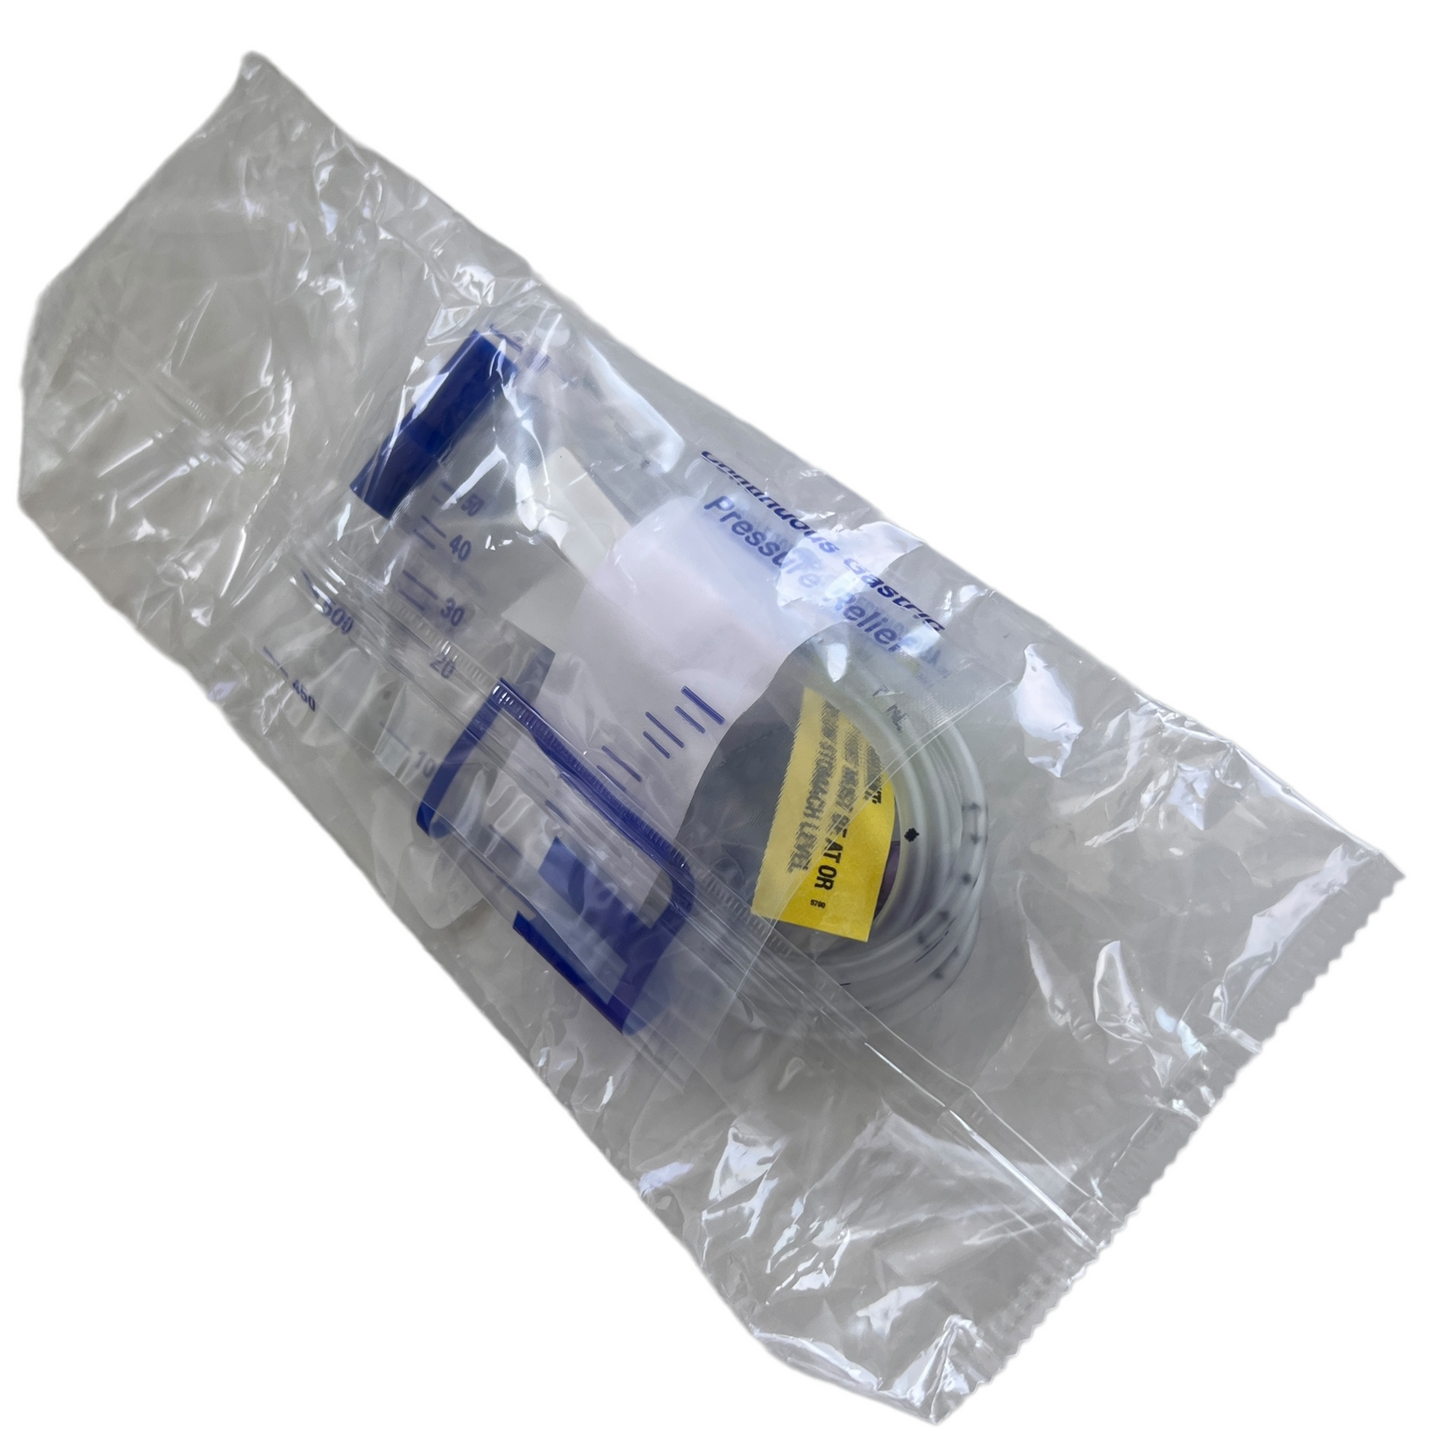 ⚖️ FARRELL* Bag — Gastric Pressure Relief Valve System (ENFit Compatible) Medical Supplies Kylee & Co   